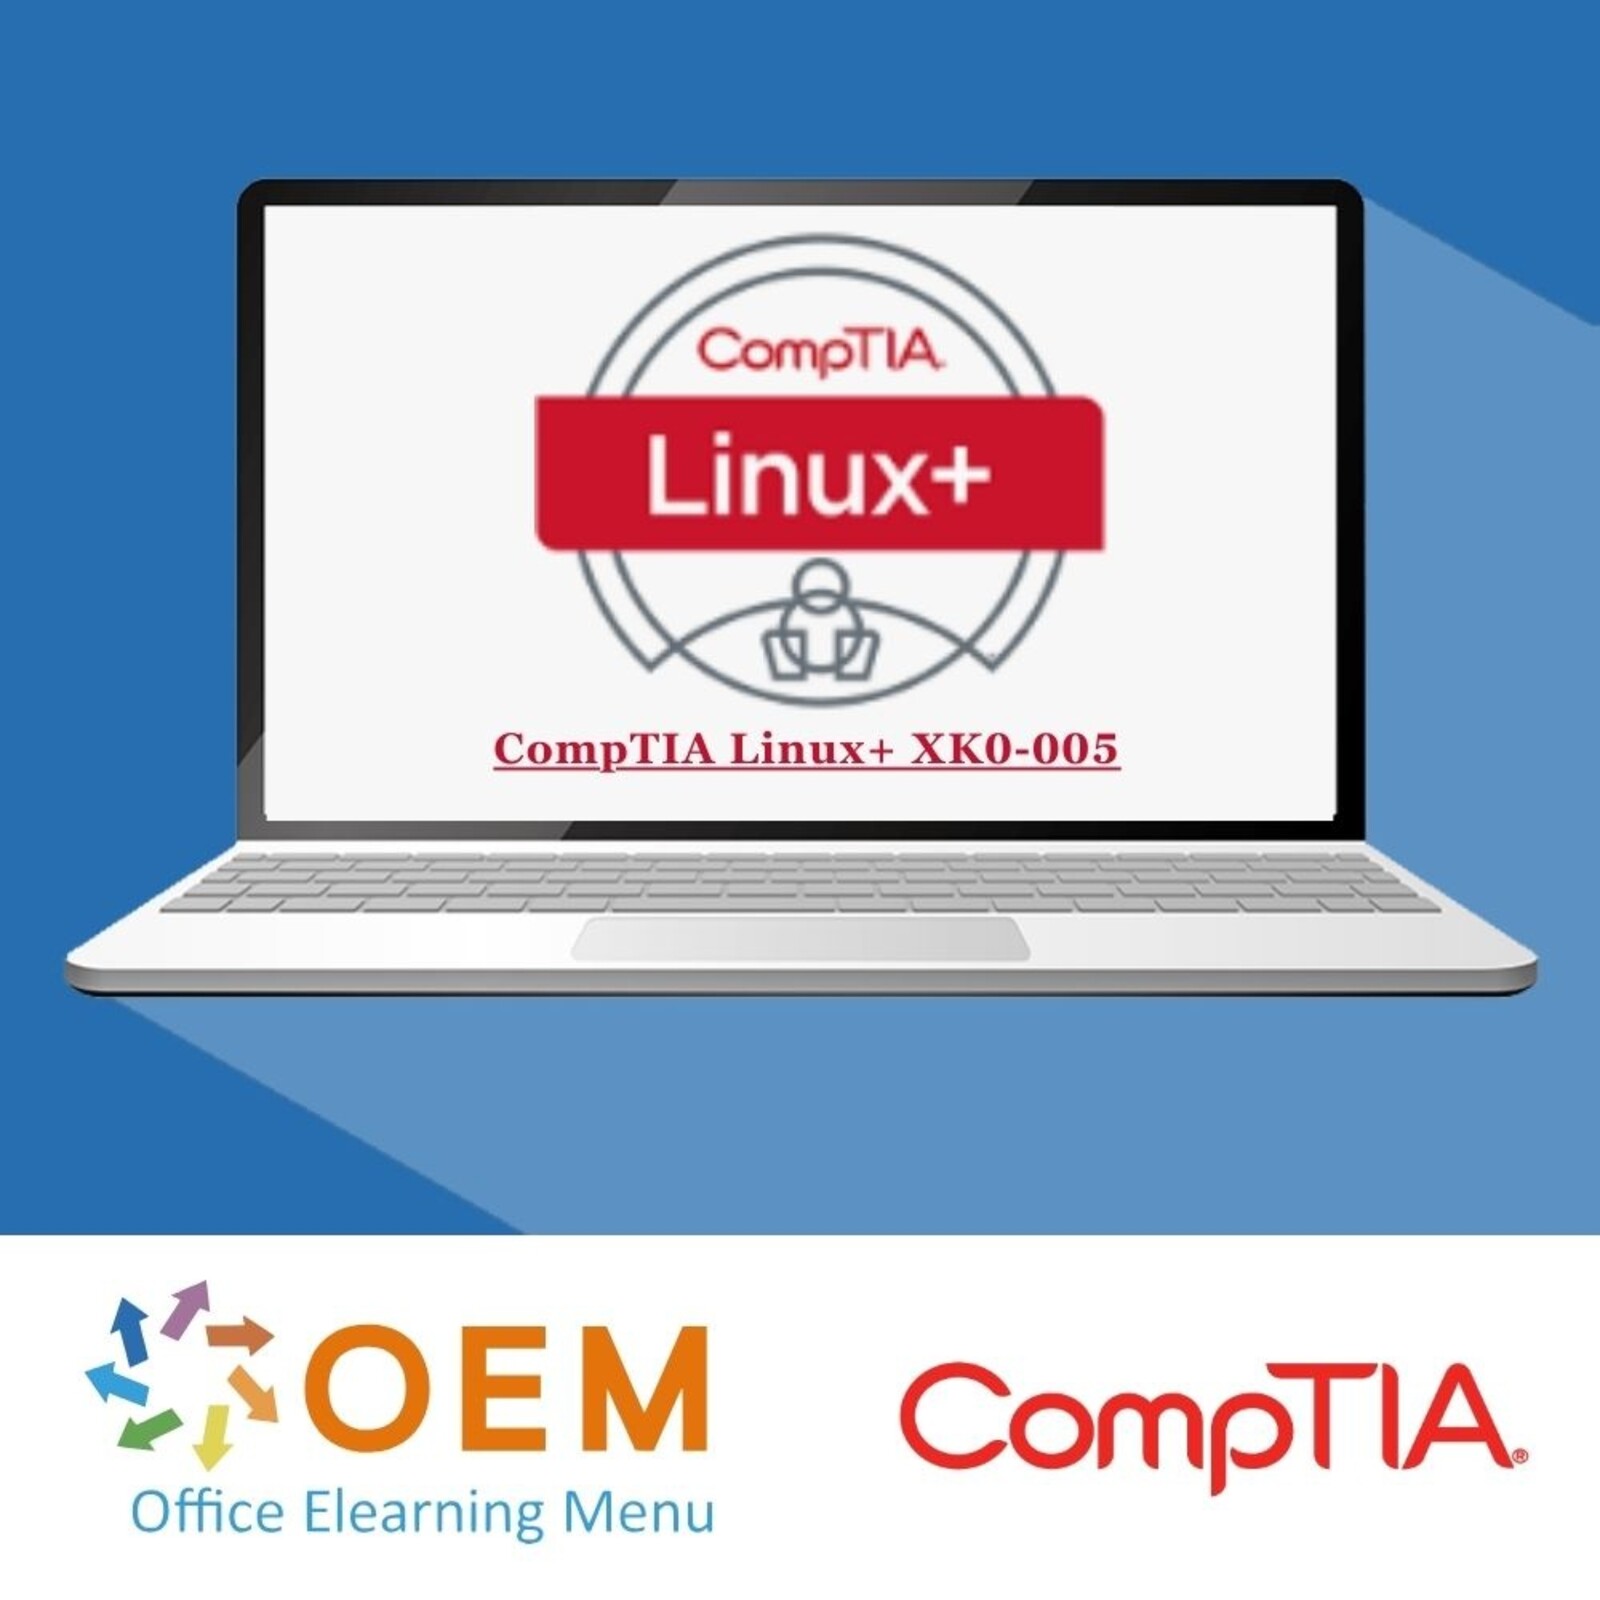 CompTIA CompTIA Linux+ XK0-005 Training